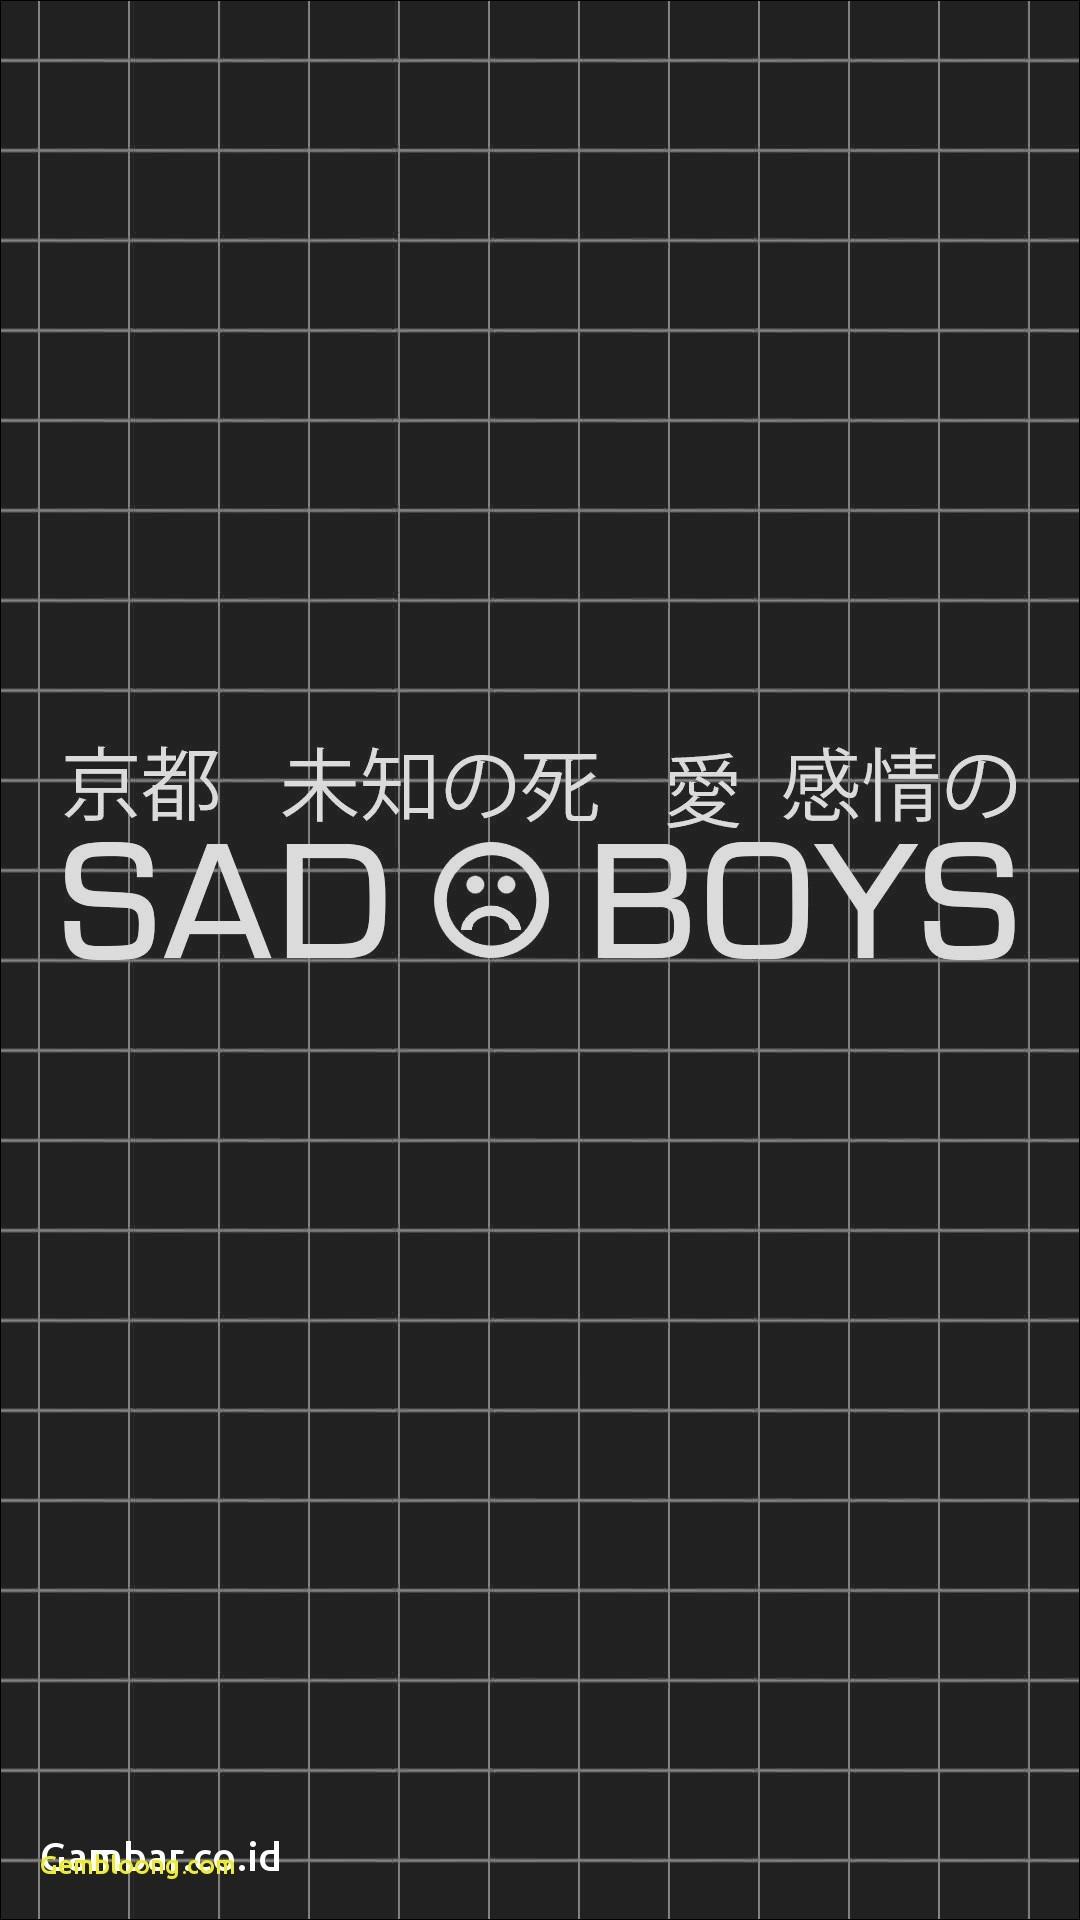 Sad Boy Wallpaper 2018 background picture